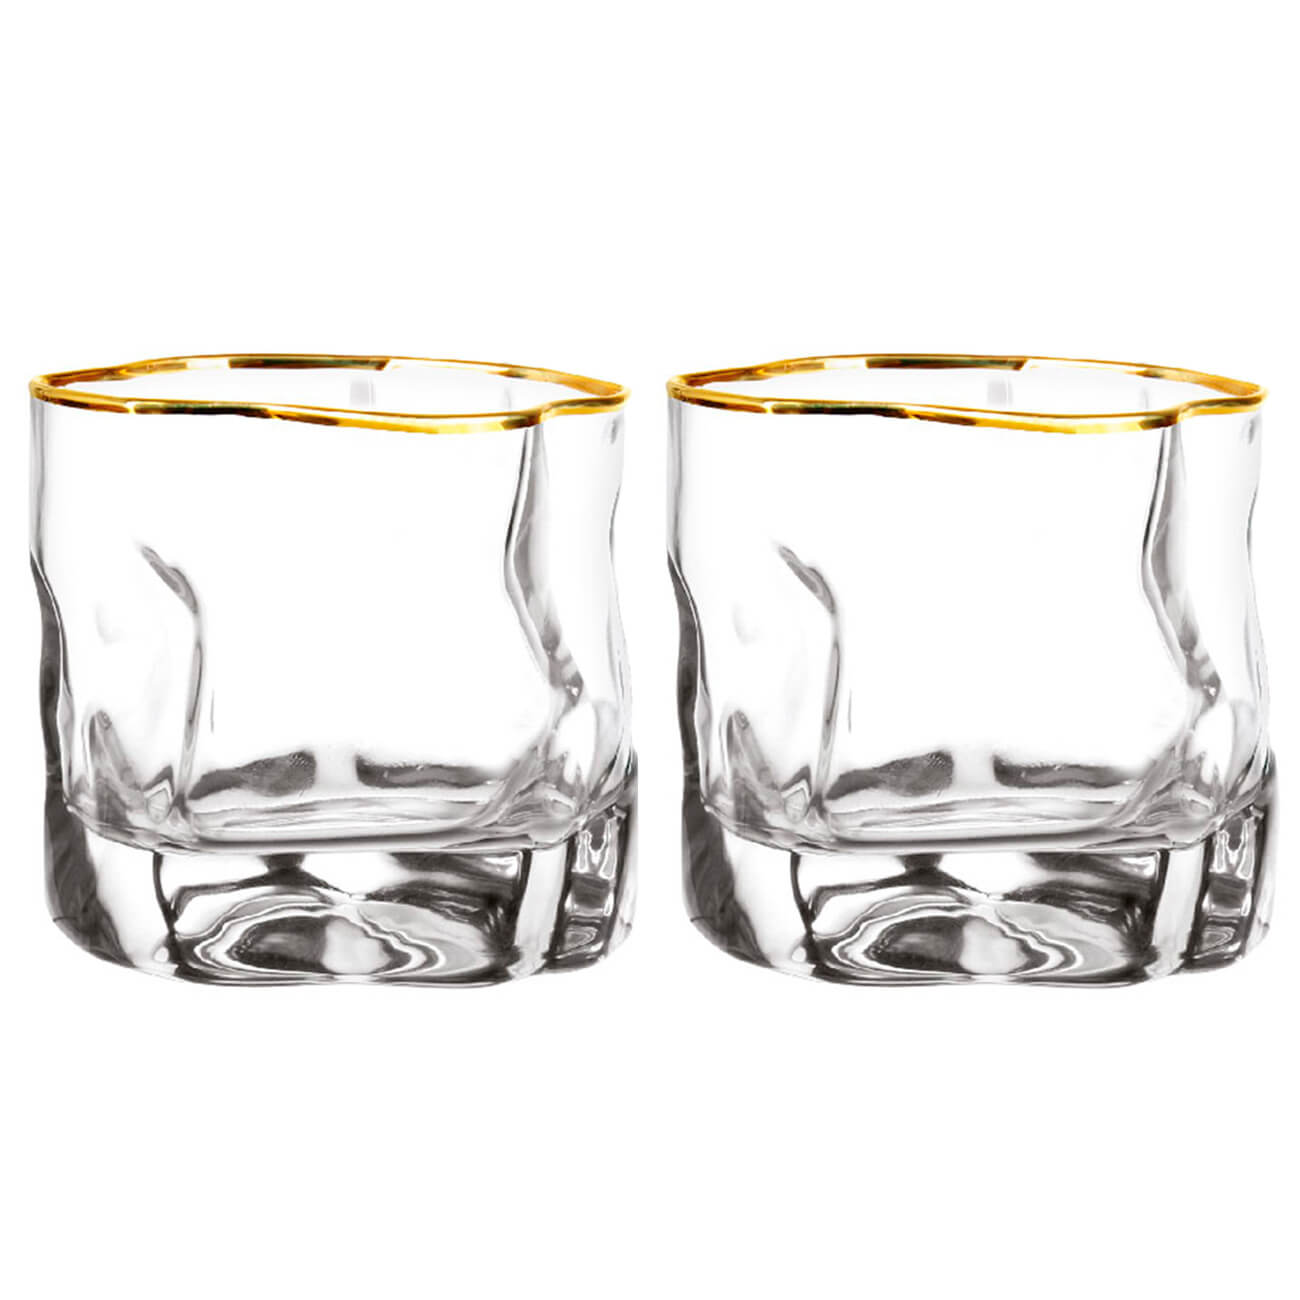 стакан для виски crystalex идеал набор 6 шт стекло 00895 Стакан для виски, 245 мл, 2 шт, стекло, с золотистым кантом, Slalom gold